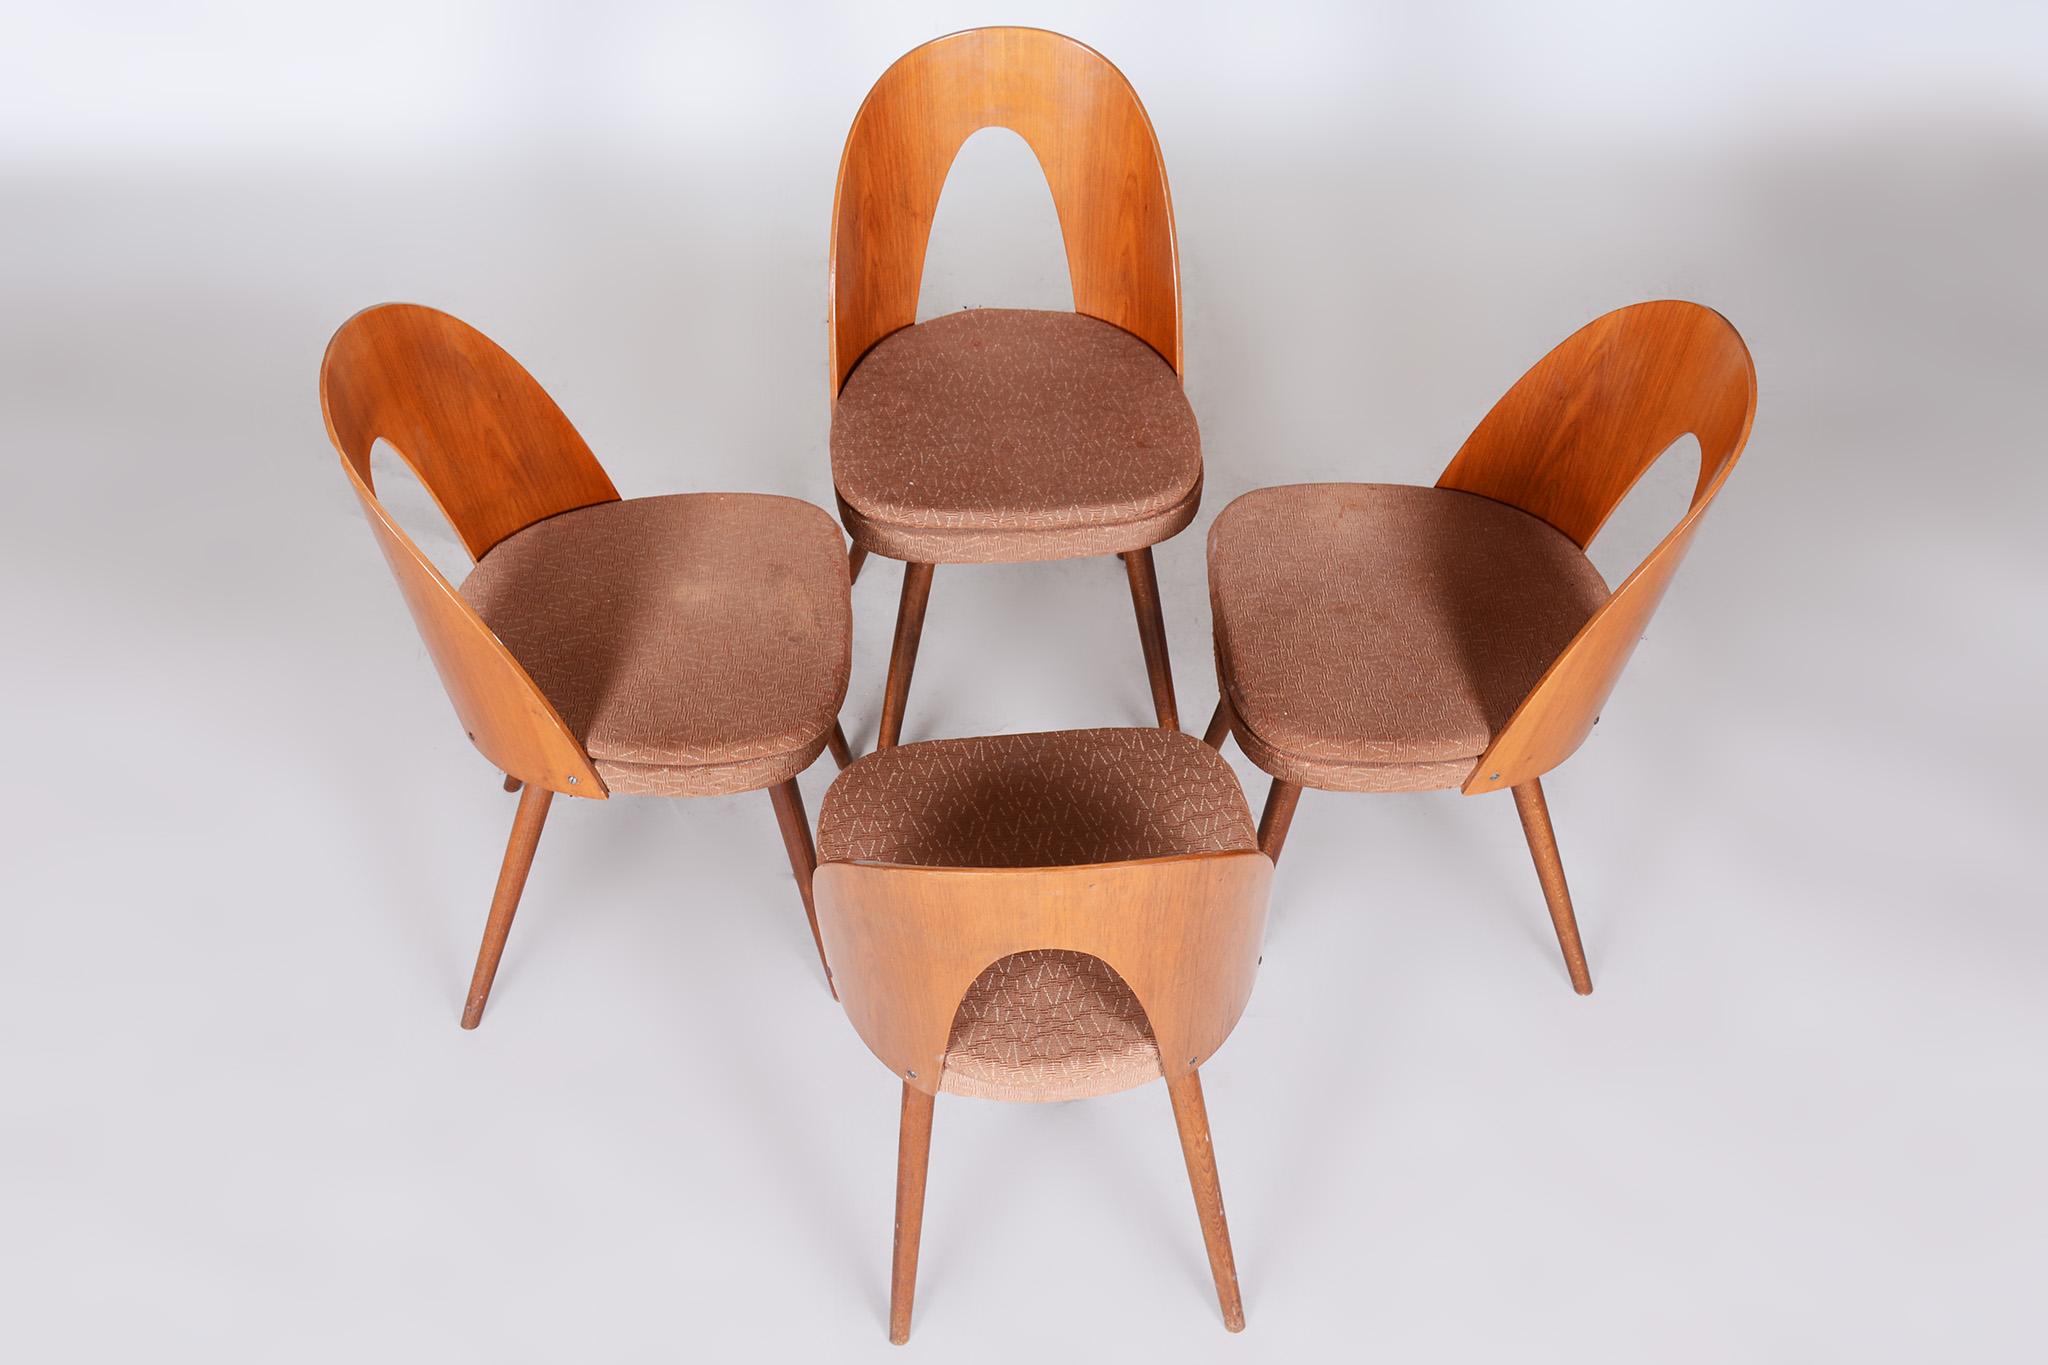 Set of Four Mid-Century Modern Chairs Made in 1950s Czechia by Antonín Šuman For Sale 4